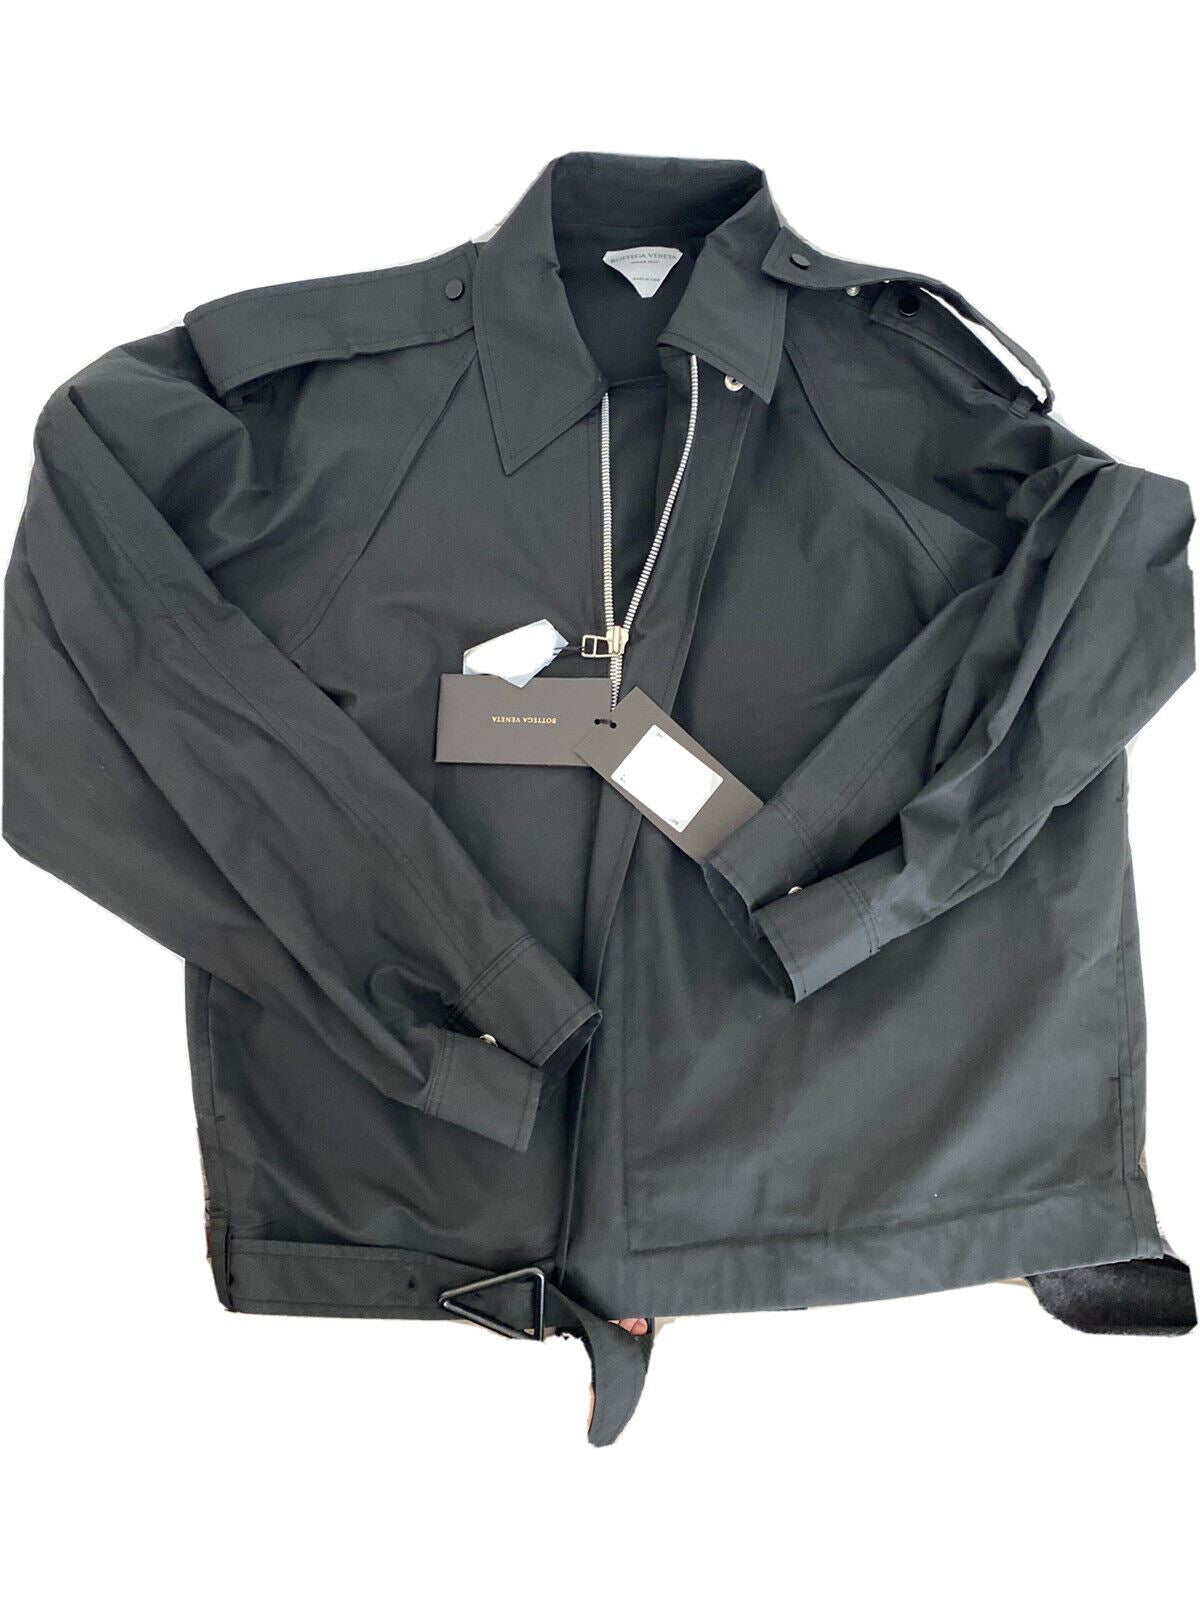 NWT $2300 Bottega Veneta Mens Blouson Technical Coated Black Jacket 42 US 618490